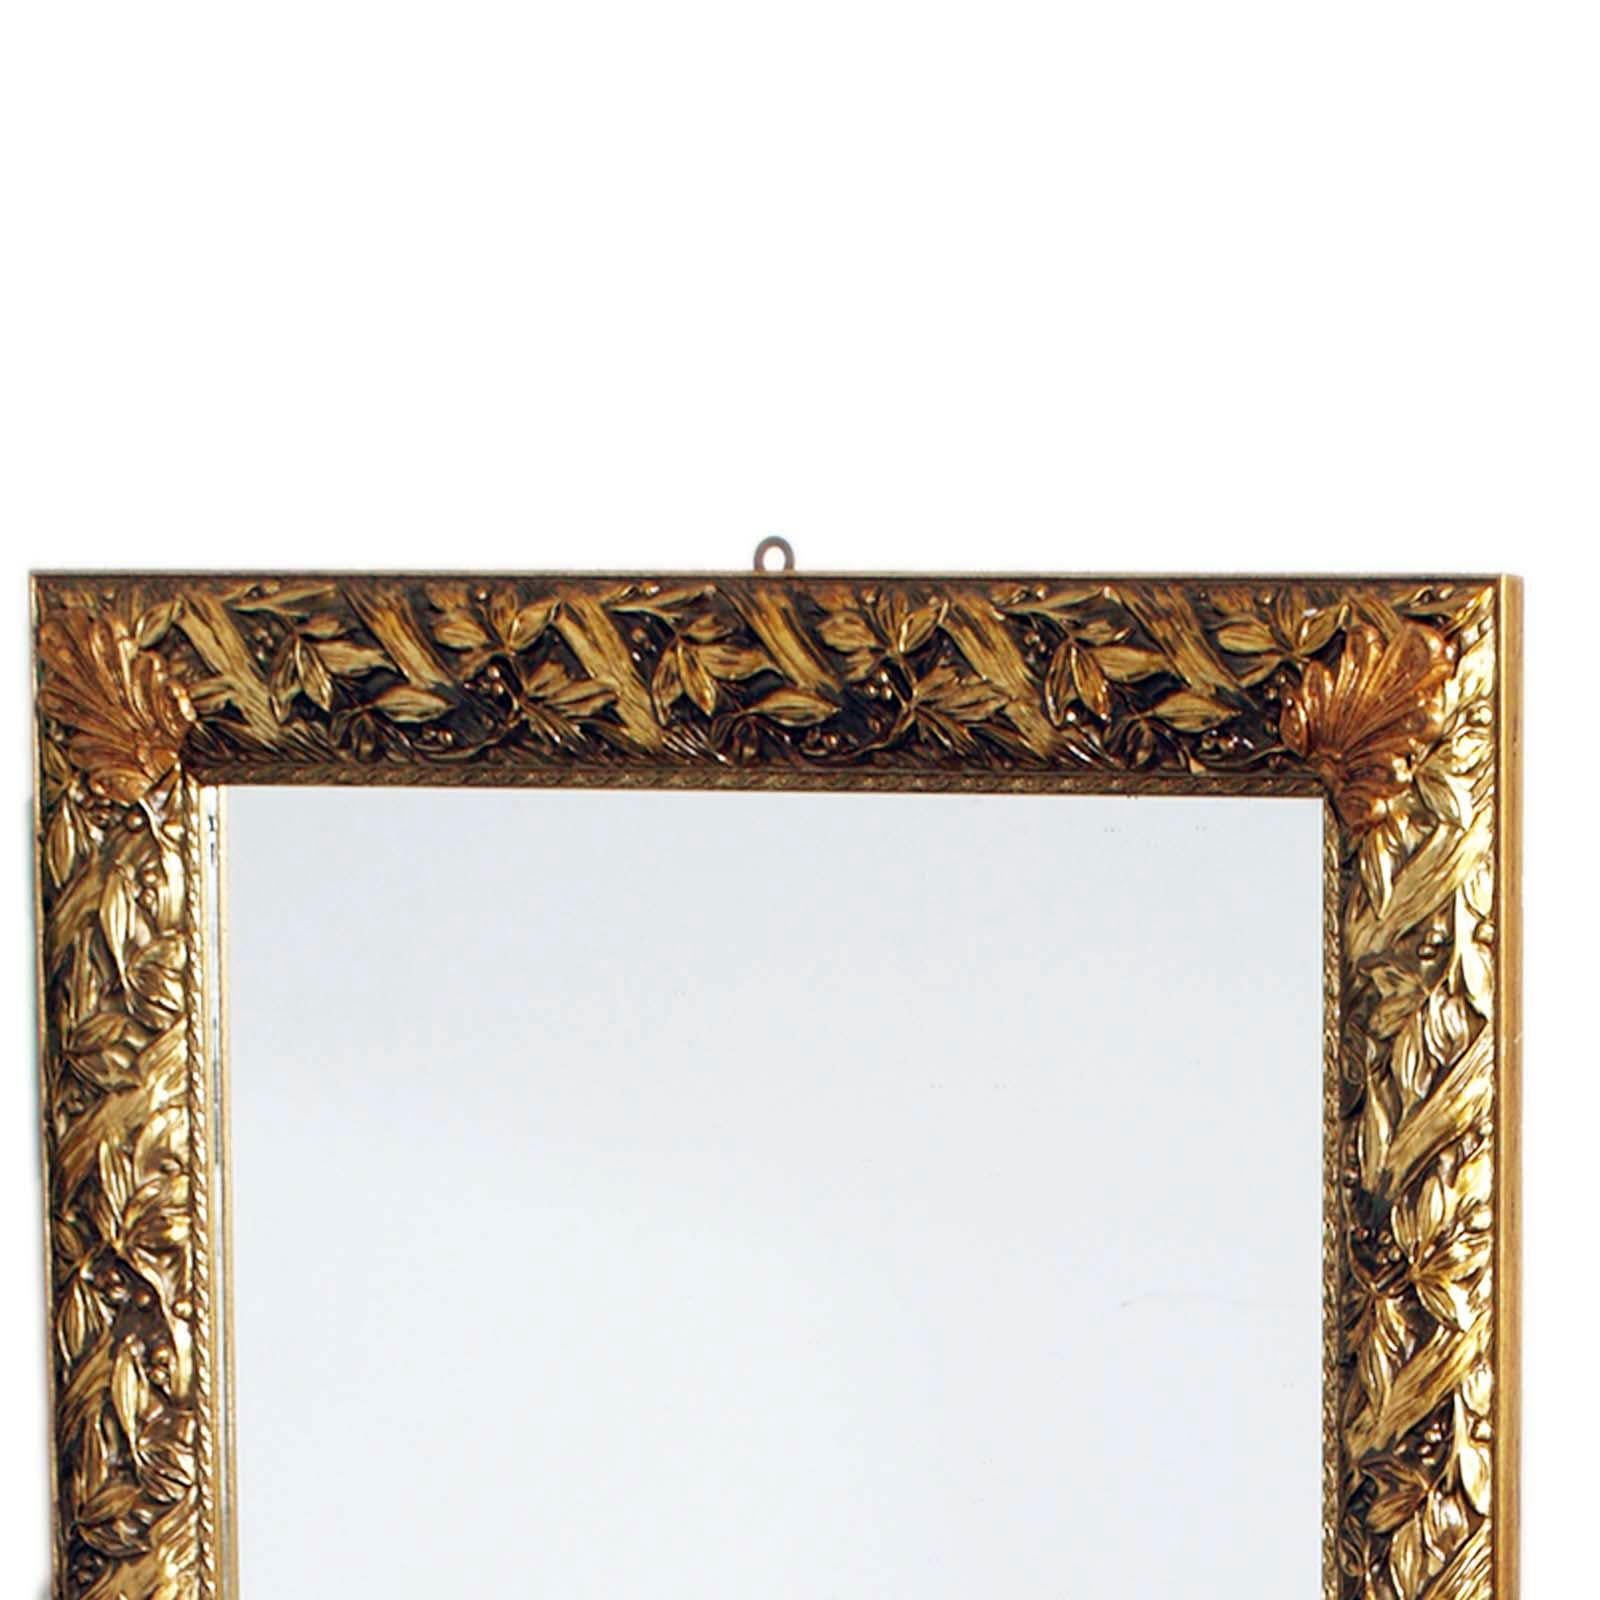 Precious and elegant Italian Florentine Art Nouveau mirror with carved golden frame by Florentine craftsmanship, circa 1940.

Measure cm: H 100, W 78, D 4.